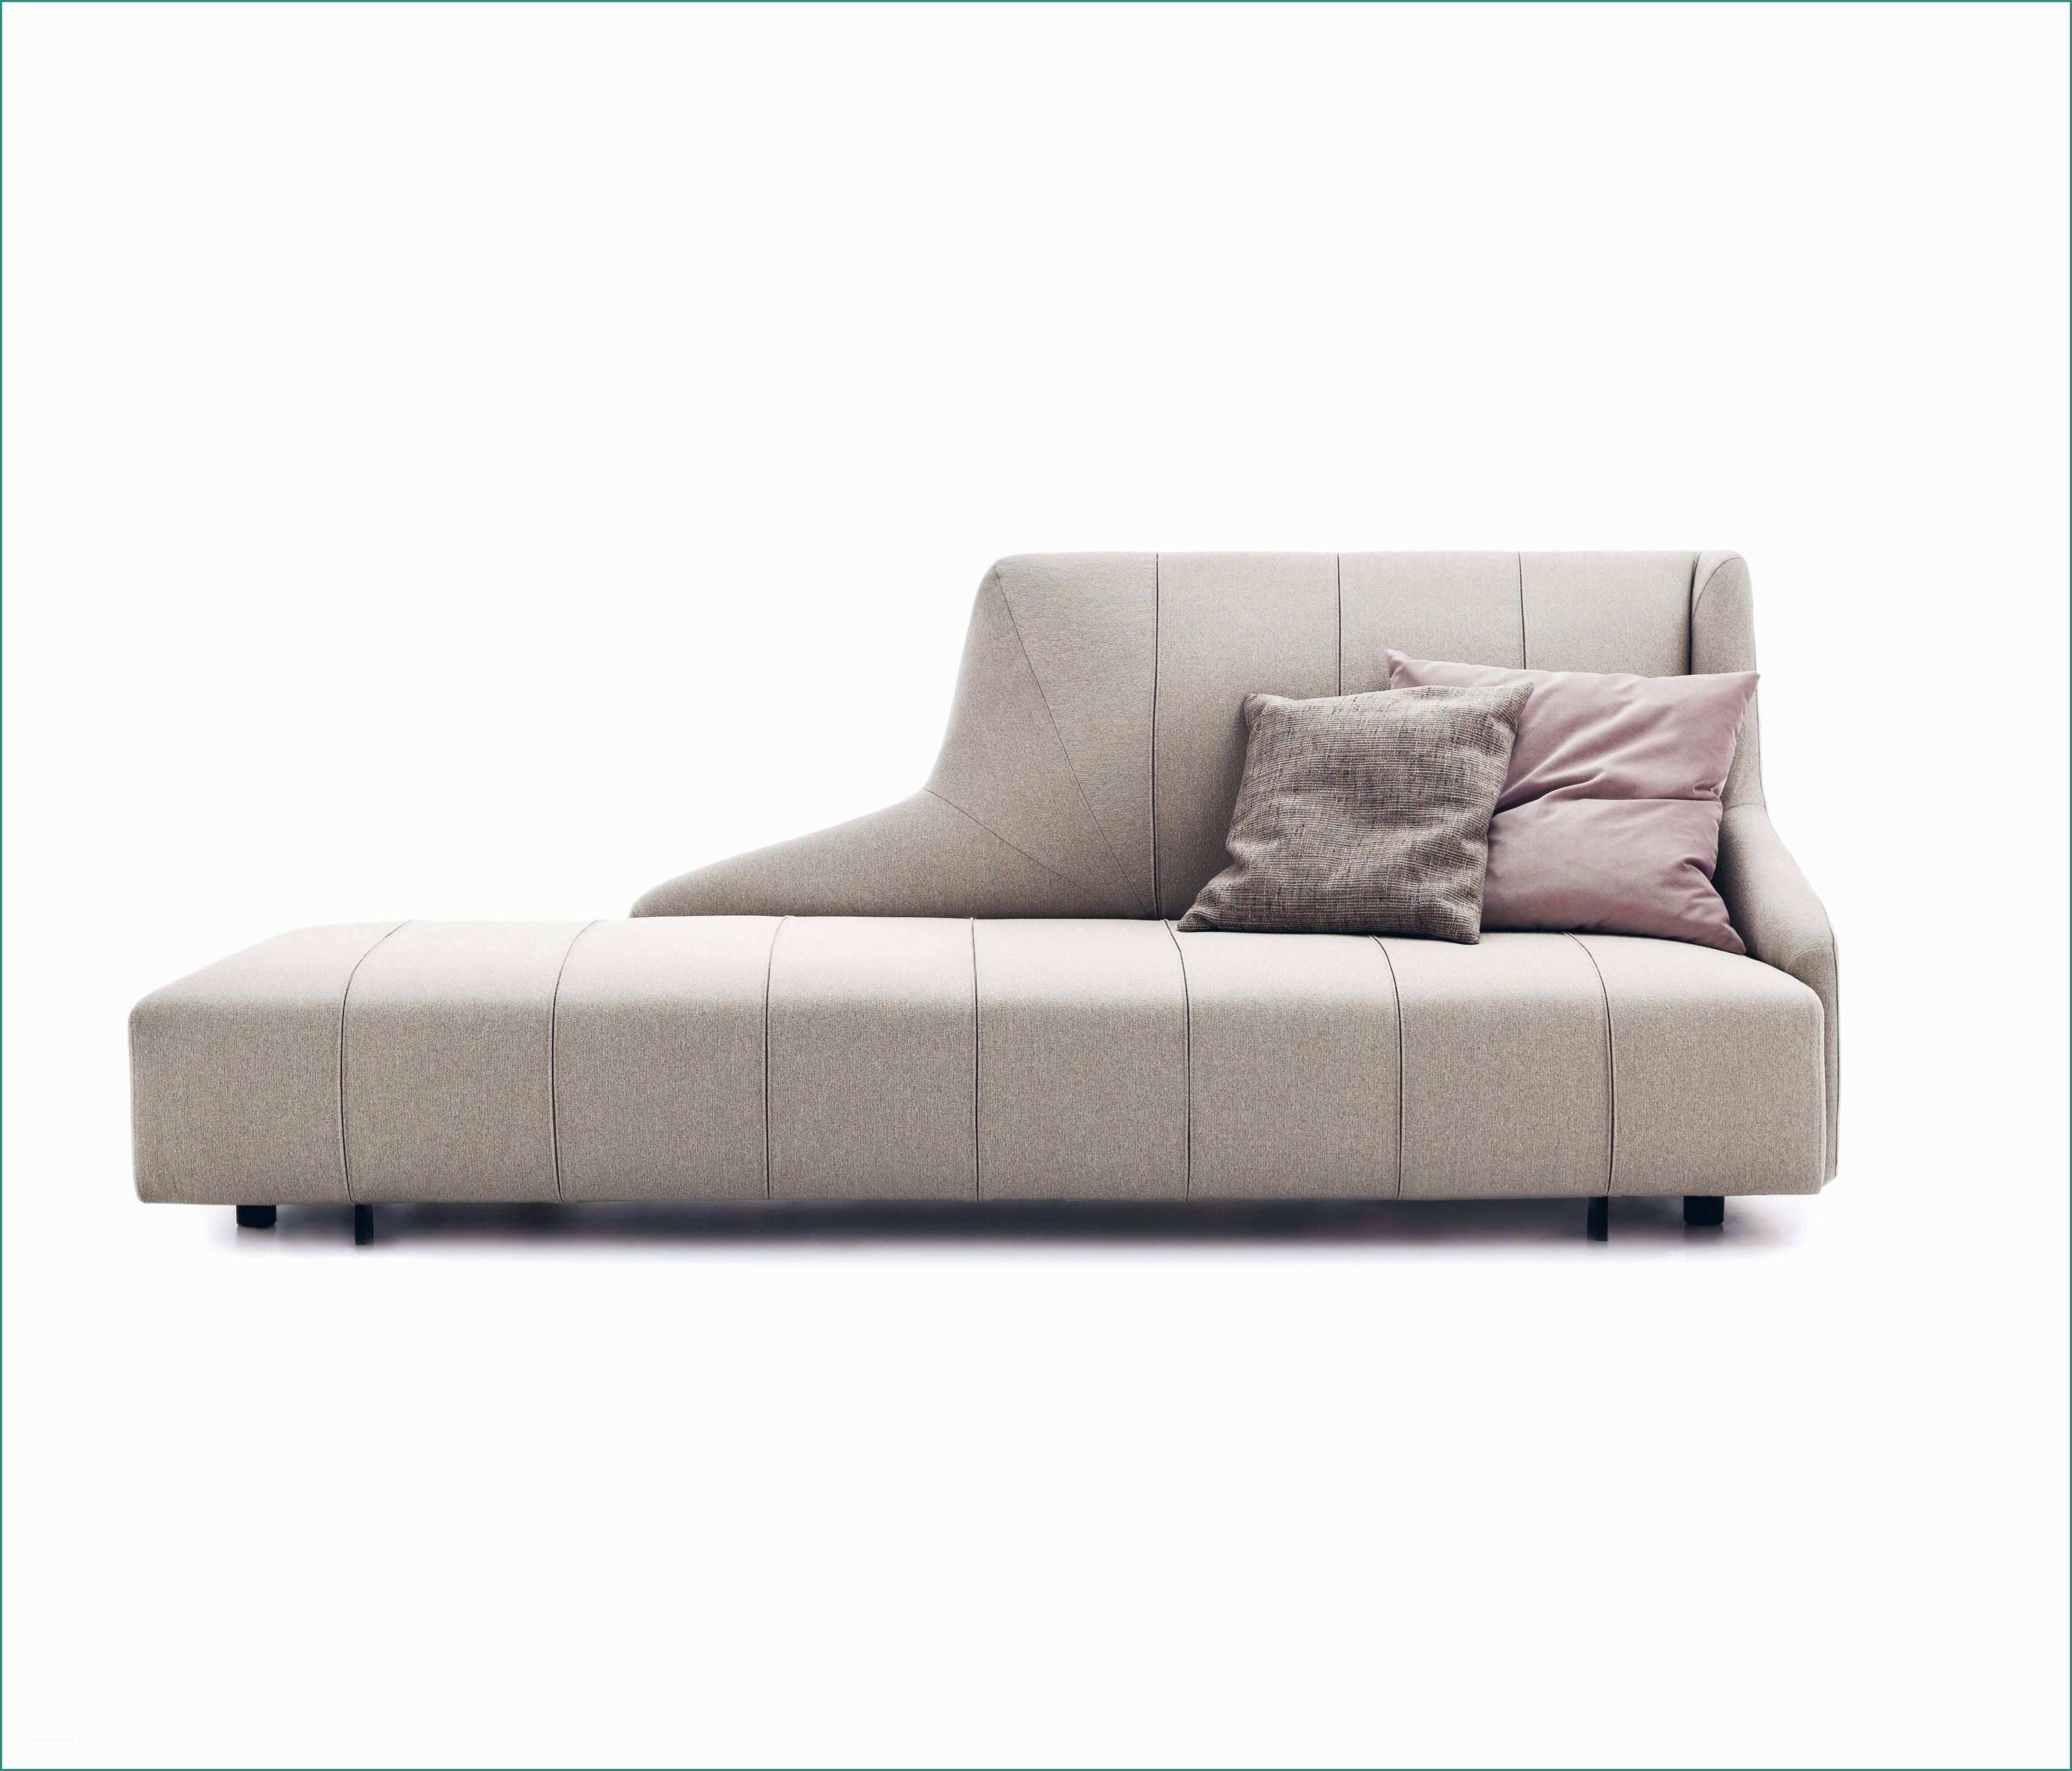 Poltrona Chaise Longue E Fluid Designer Lounge sofas From Ditre Italia â All Information